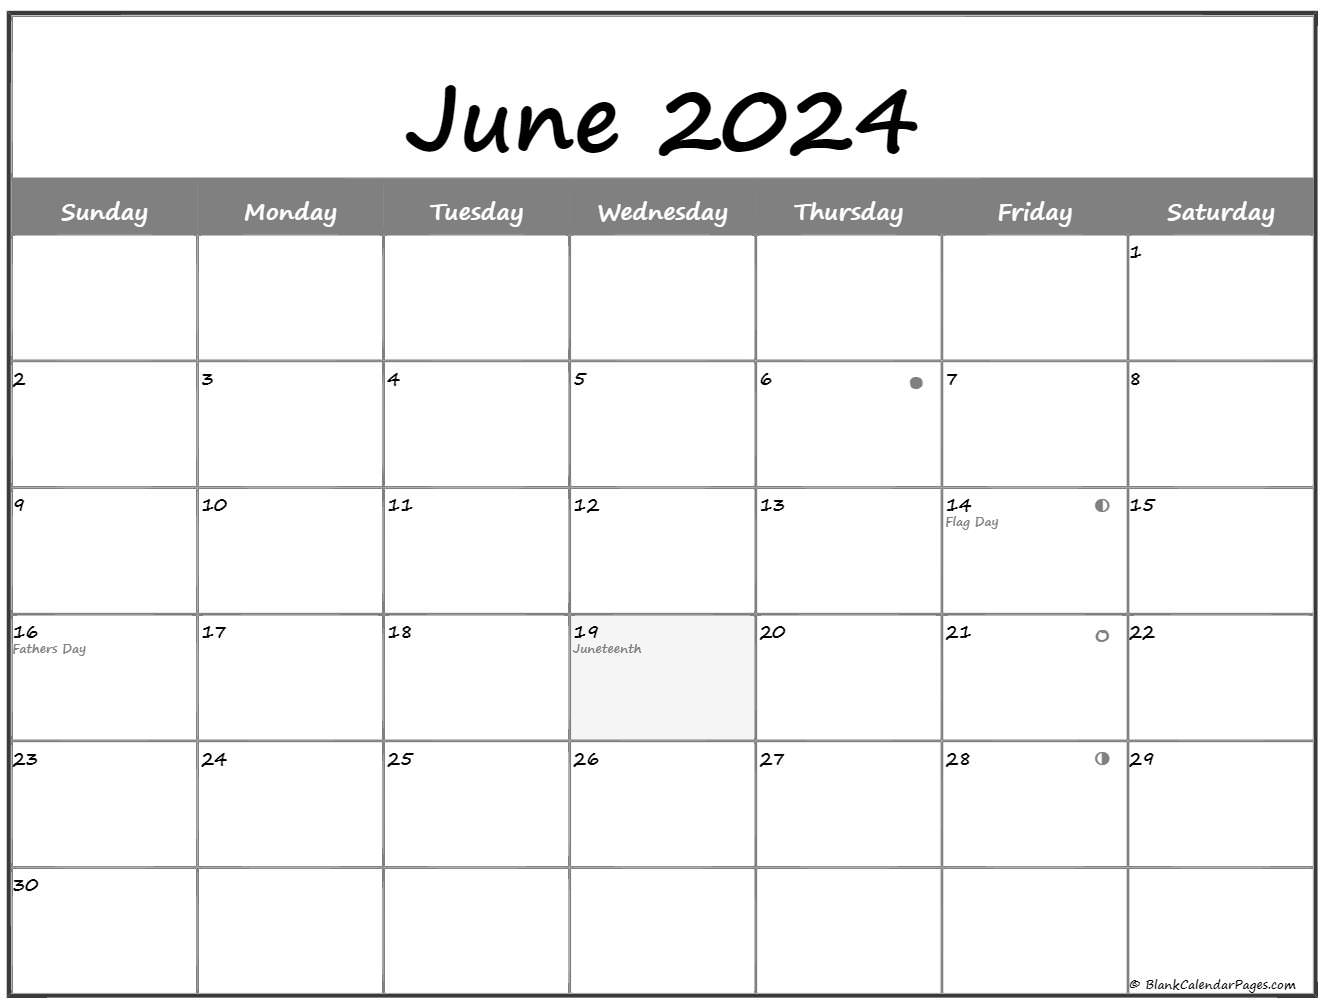 June 2021 Lunar Calendar | Moon Phase Calendar1767 x 1333